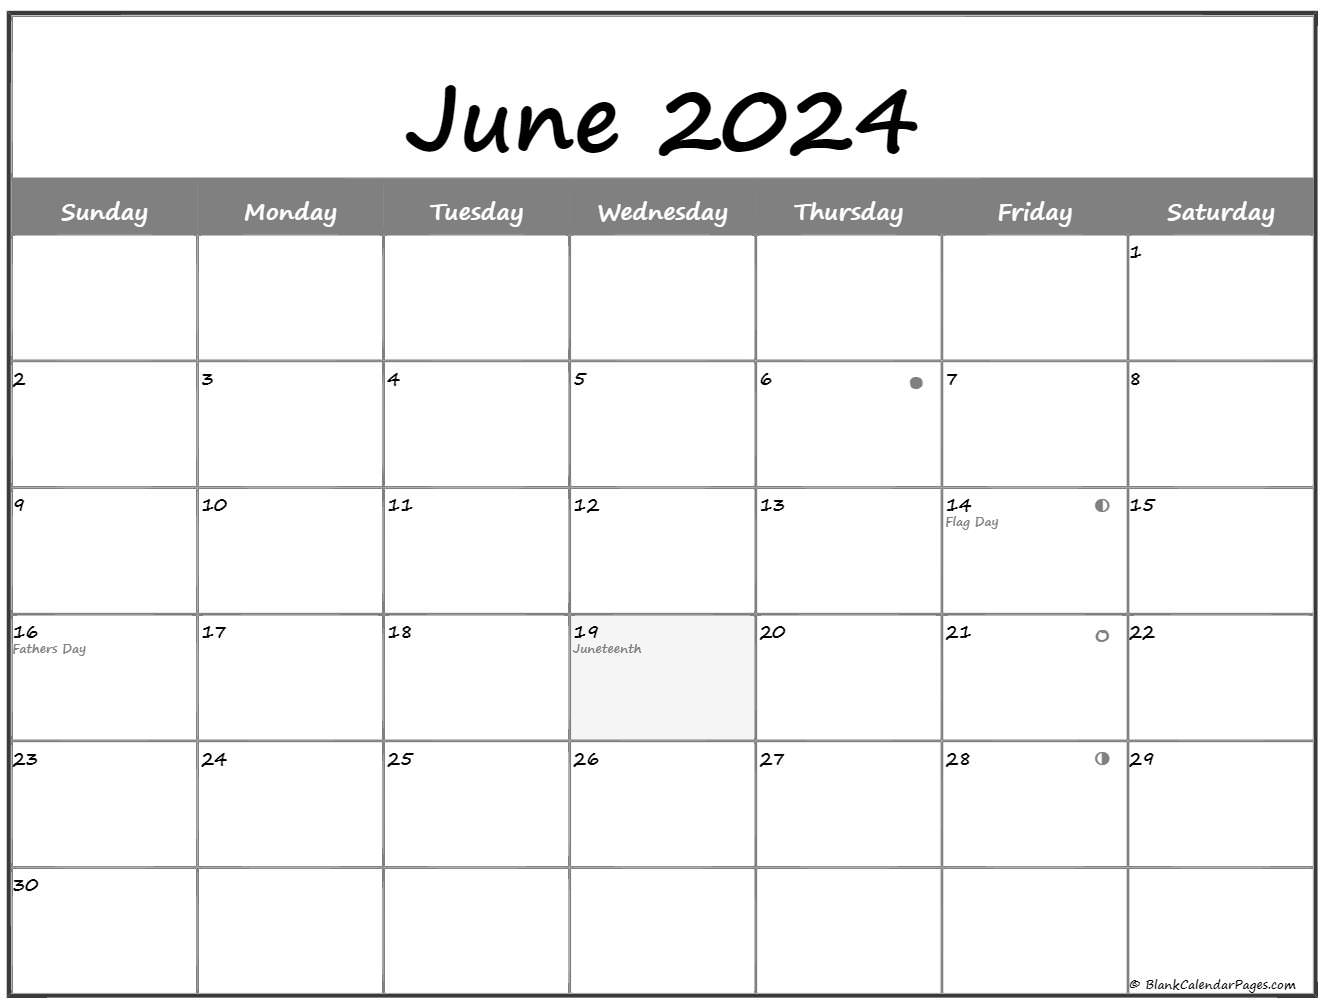 June 2021 Lunar Calendar | Moon Phase Calendar1767 x 1333